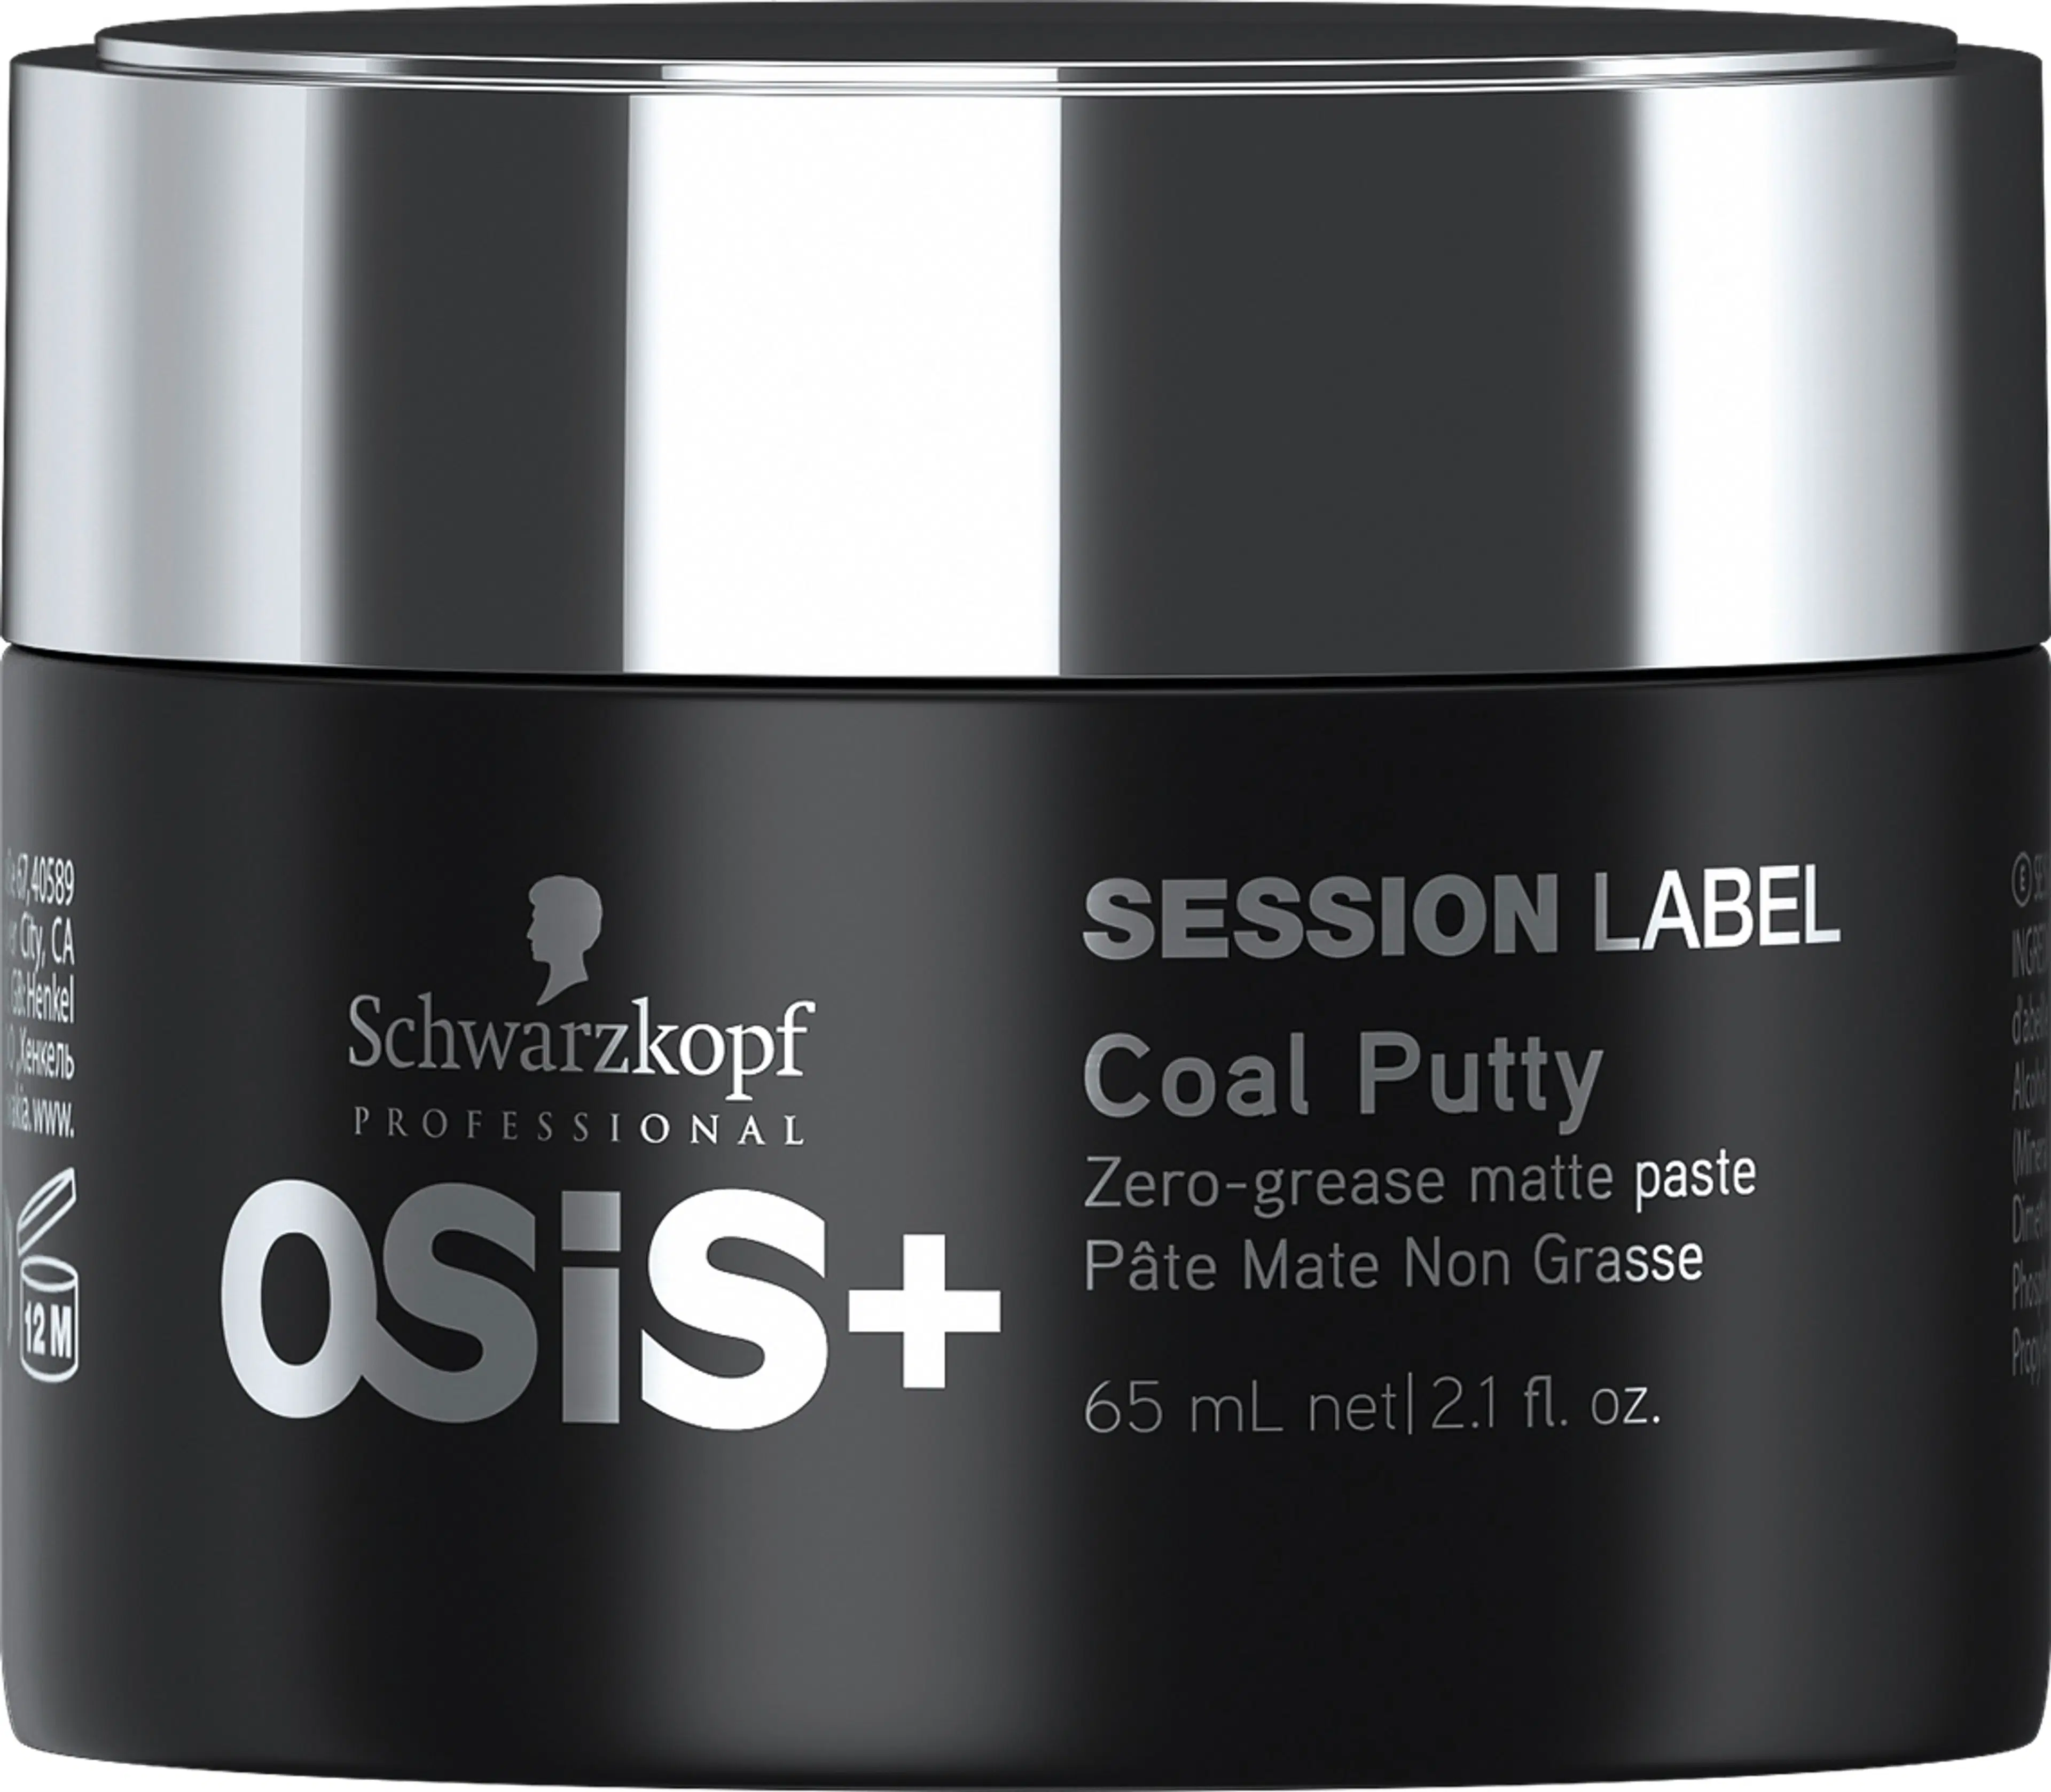 Schwarzkopf Osis+ Session Label Coal Putty hiilivaha 65 ml